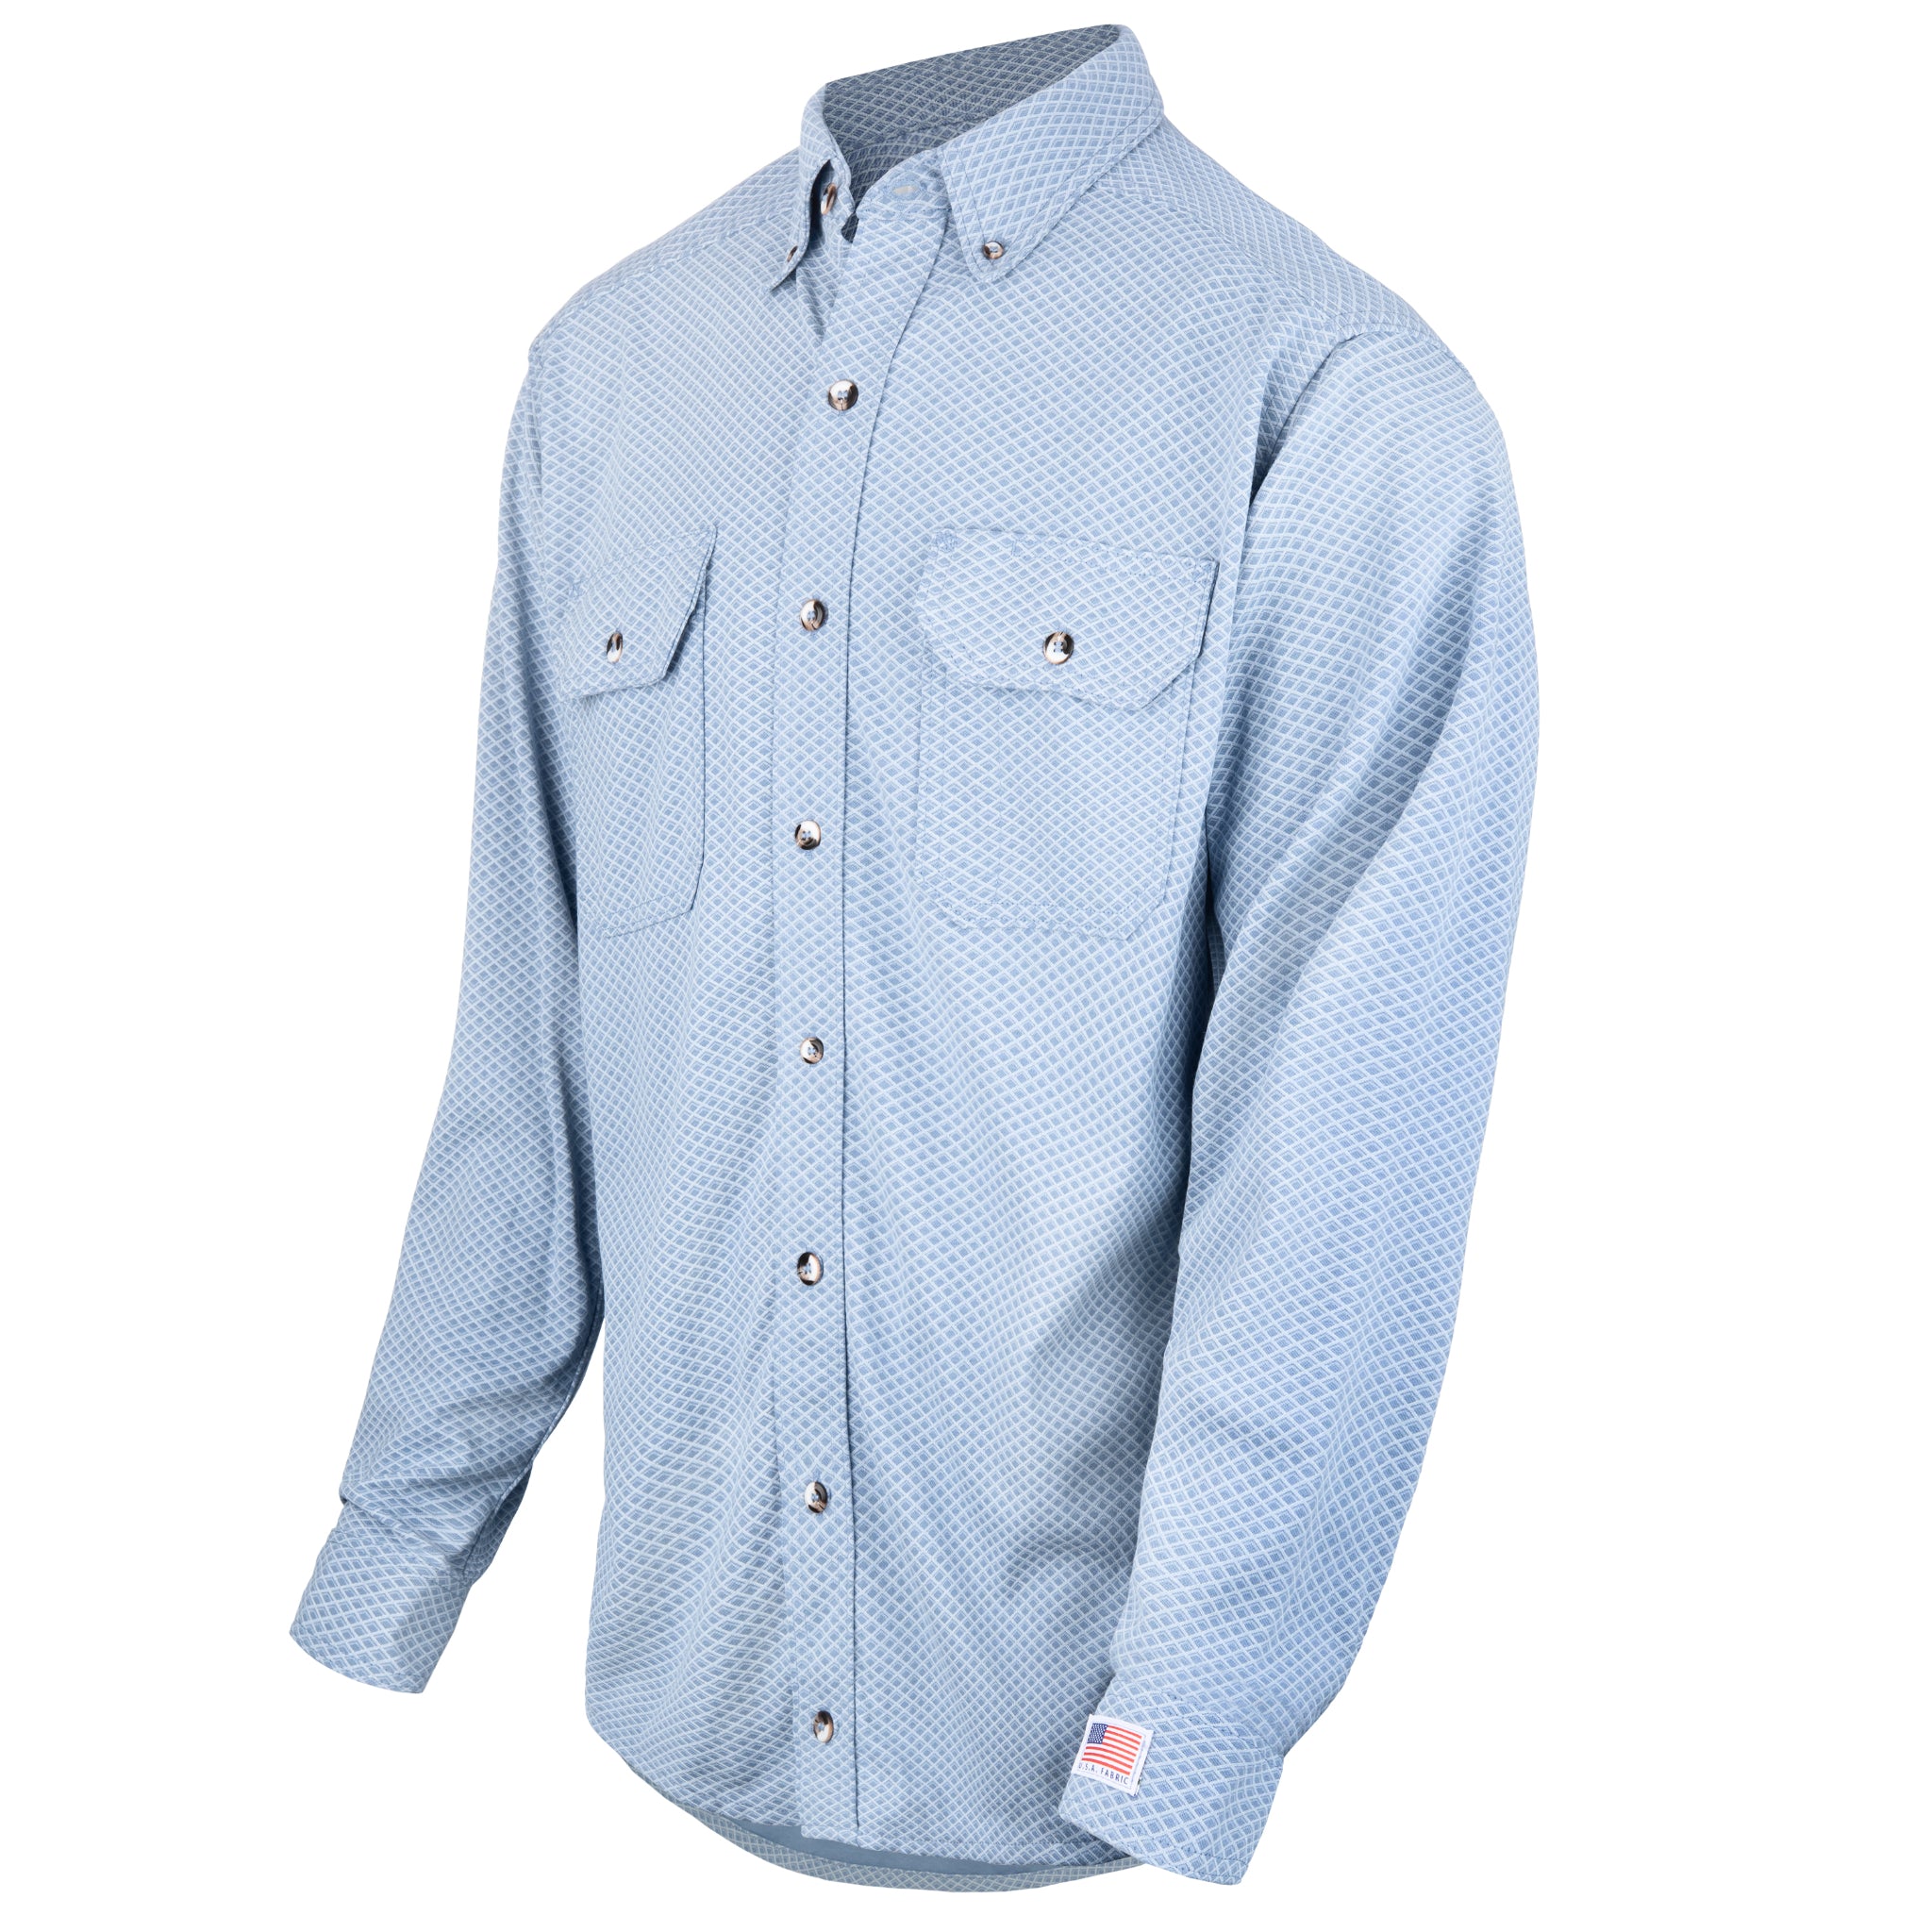 LAKELAND ISHATP09 FR Button Up Shirt, Light Blue Print, 1 Each